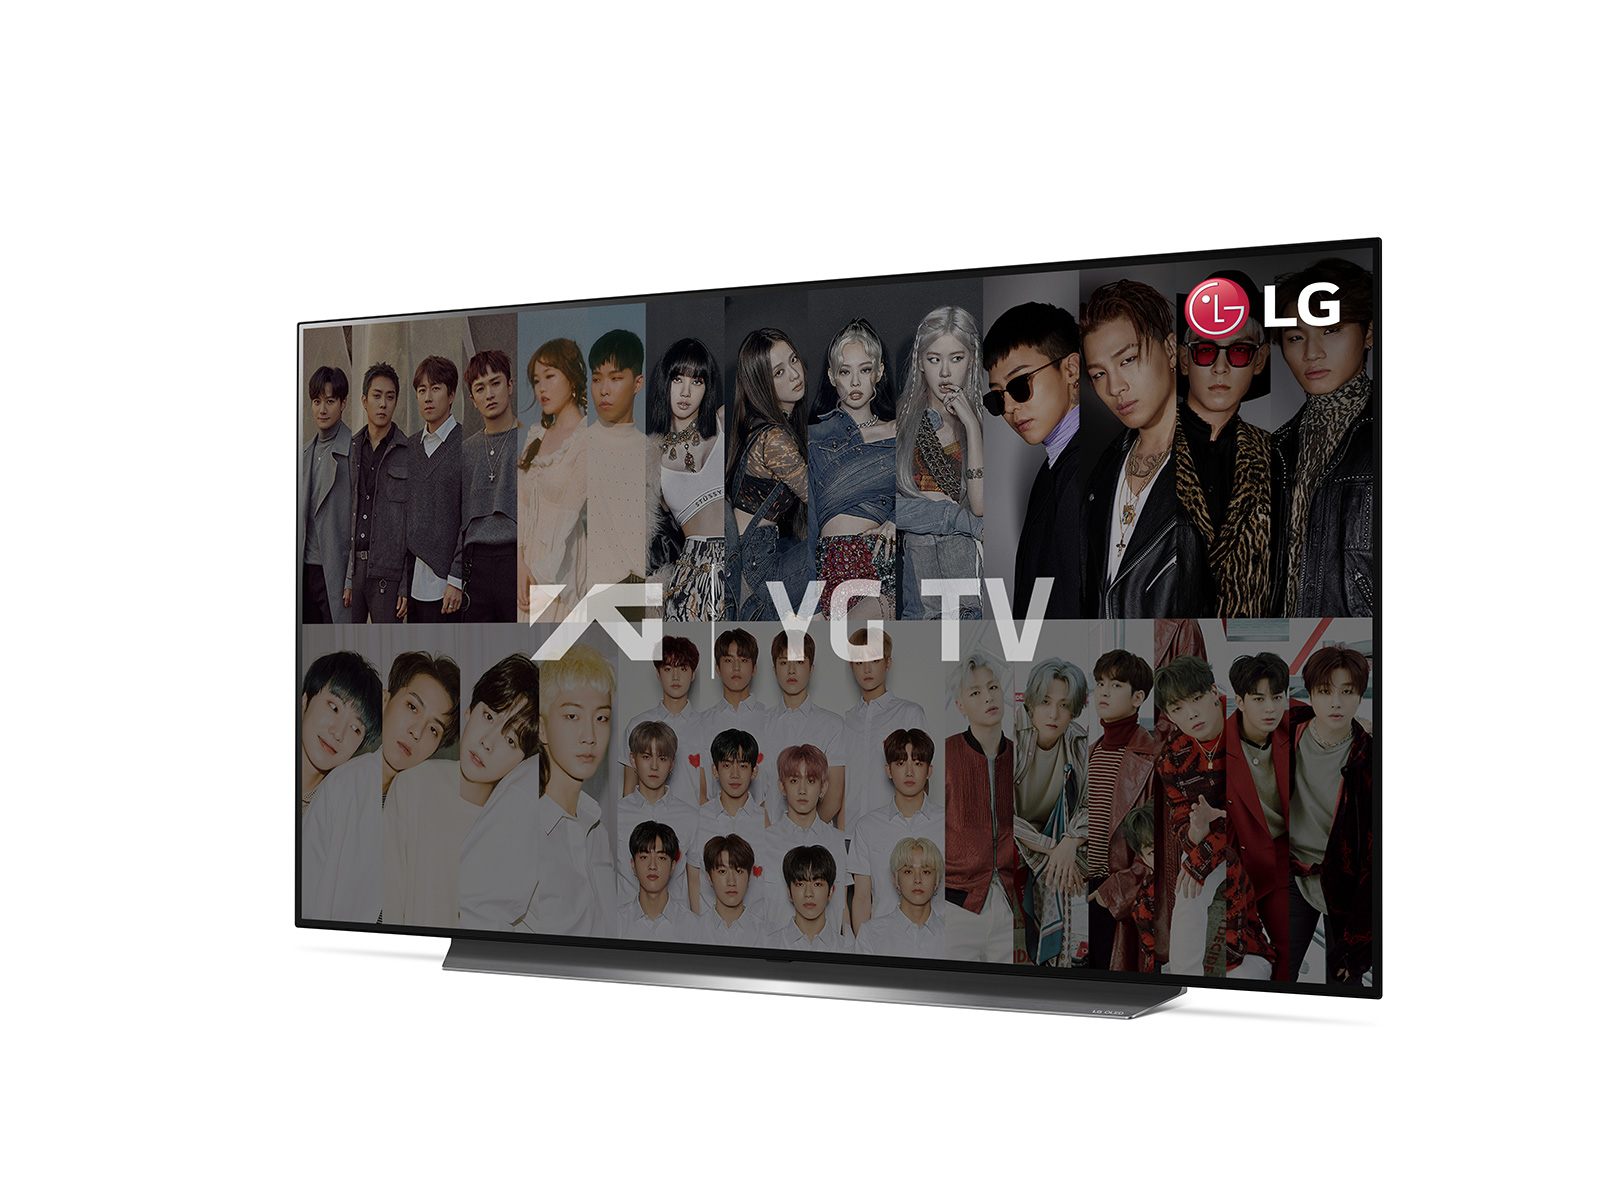 , H LG επεκτείνει το περιεχόμενο των LG CHANNELS με Premium Κ-περιεχόμενο